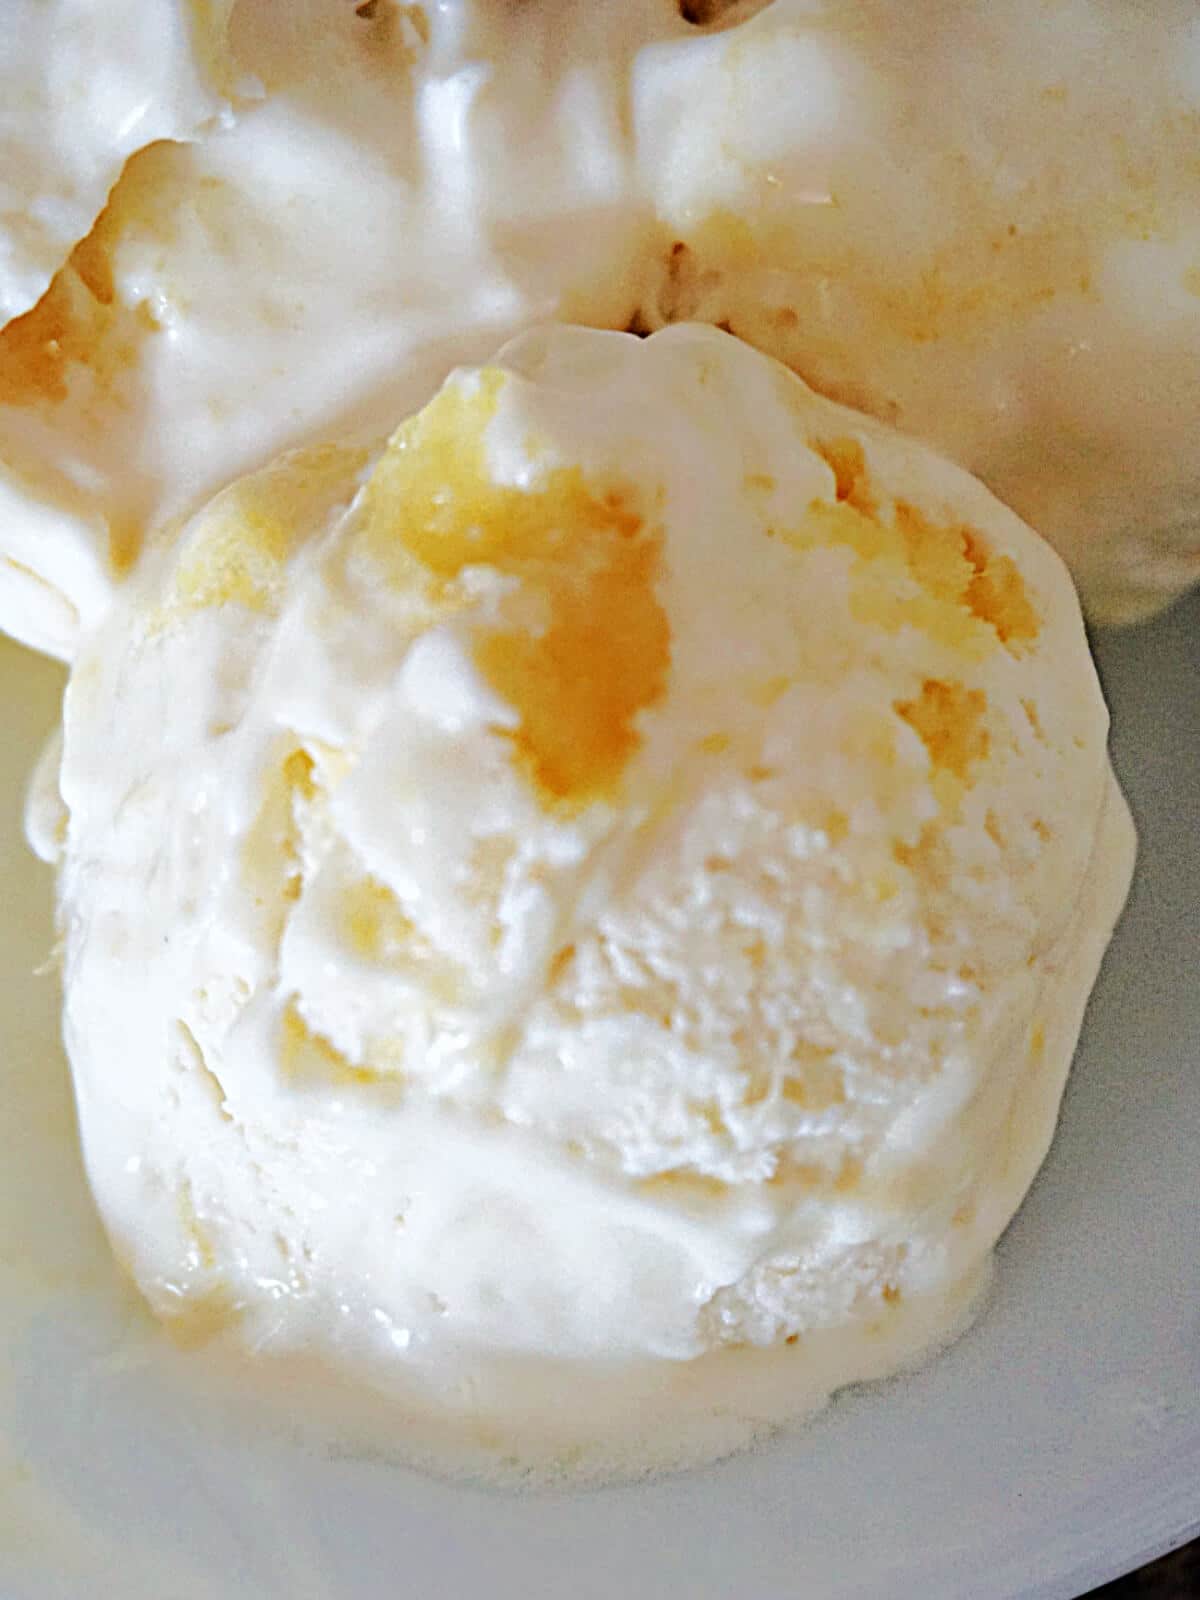 Close-up shot of a scoop of ice cream.